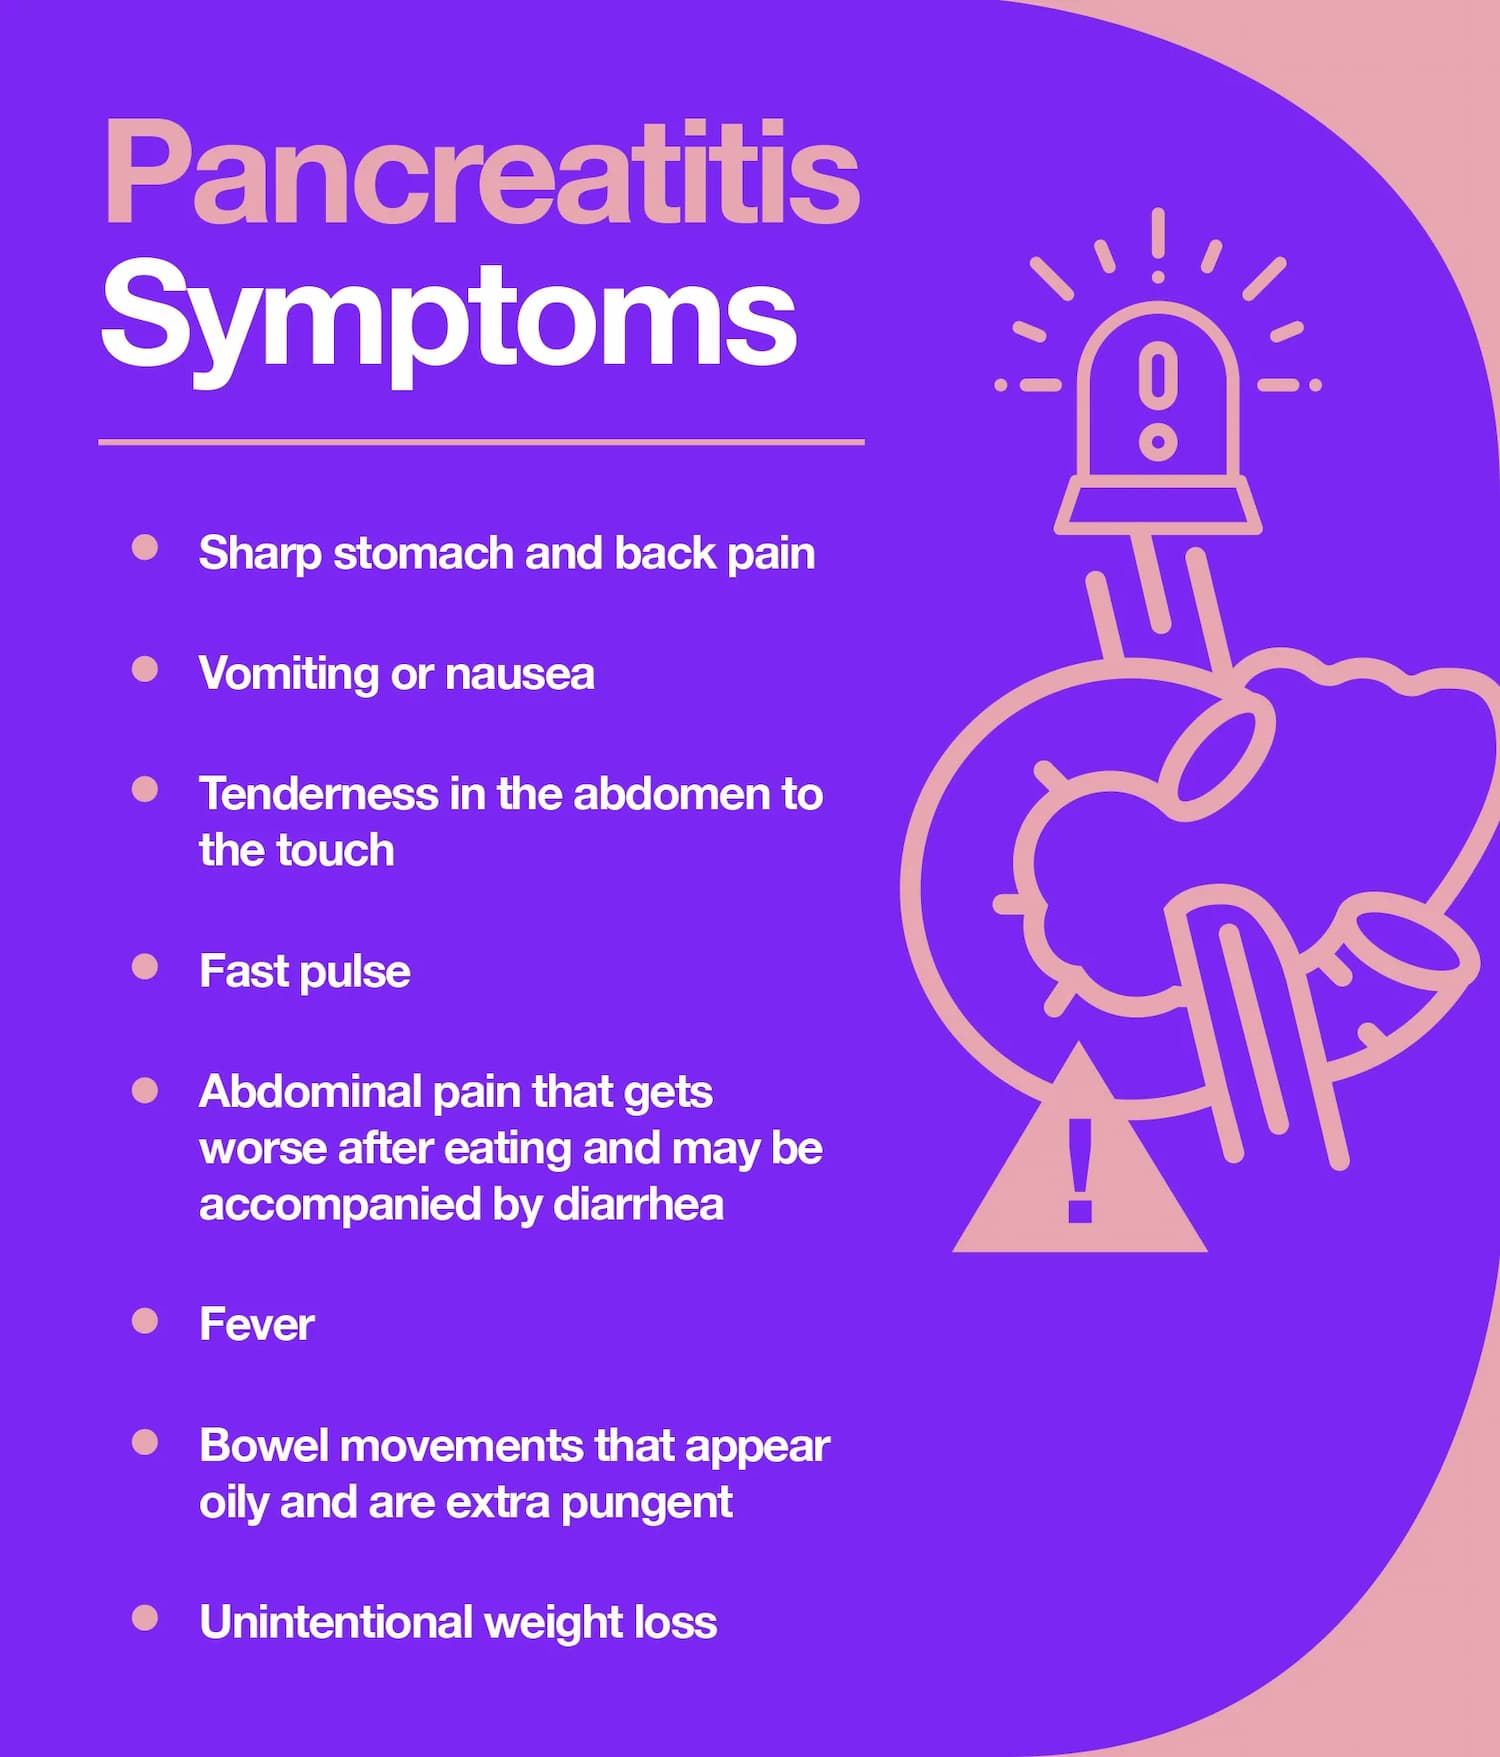 Common signs of pancreatitis